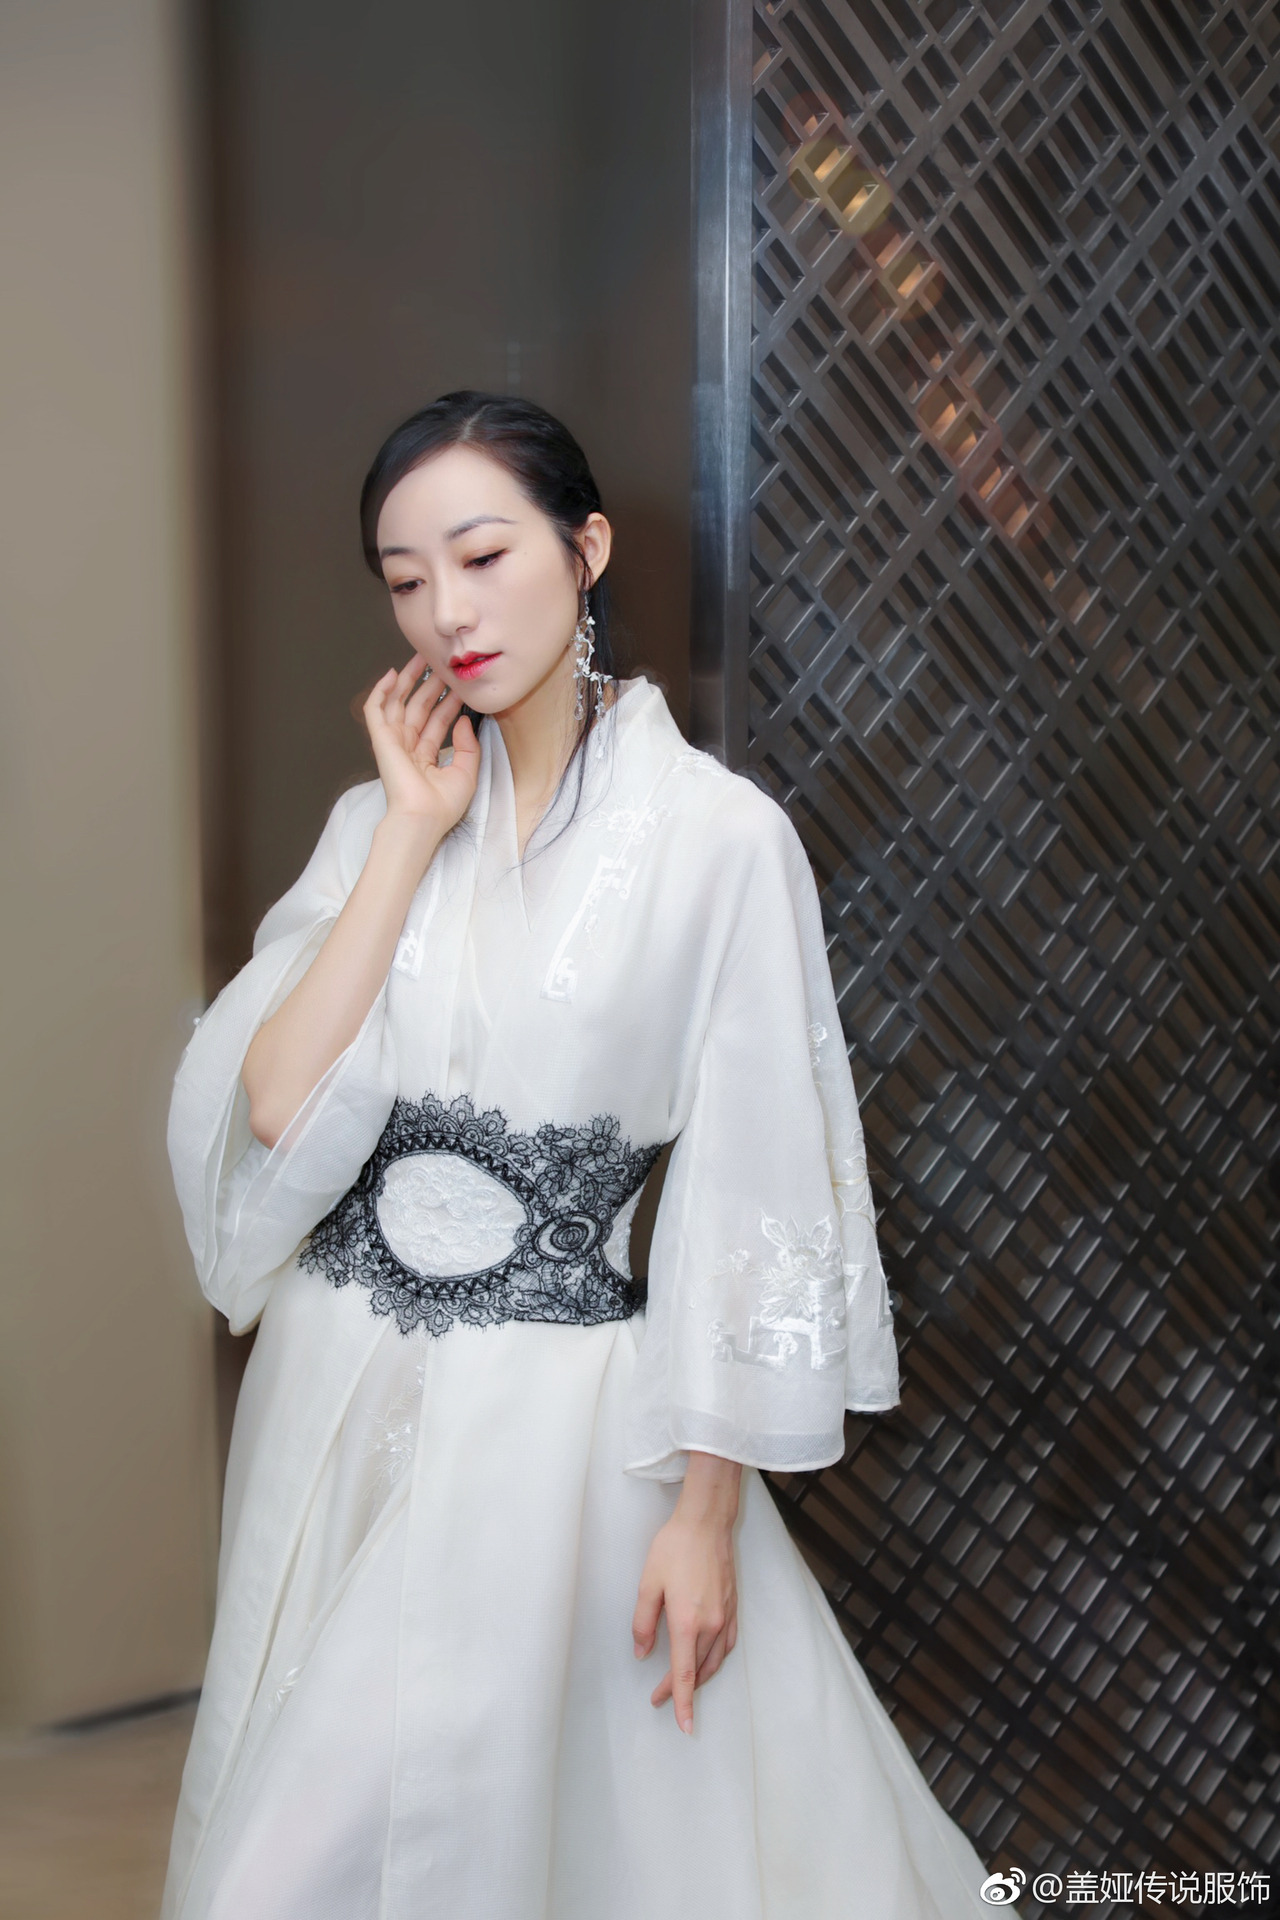 dressesofchina: Actresses Liu Tao and Han Xue â€¦ â€“ China (ä¸­å›½)